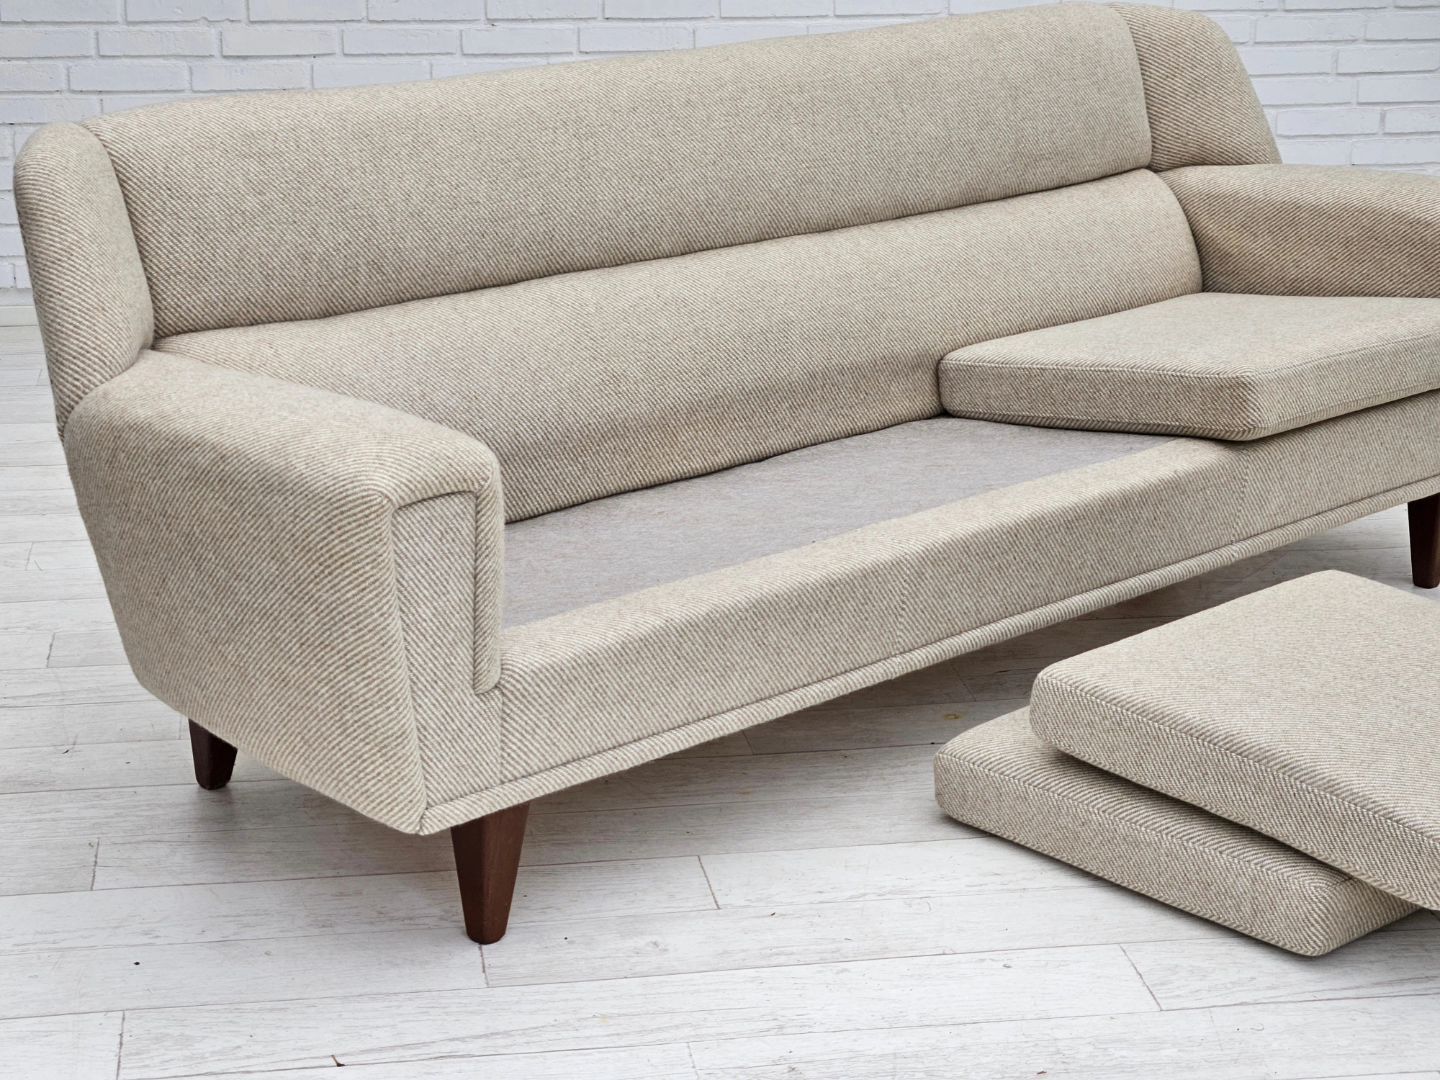 1960s, Danish design sofa by Kurt Østervig model 61, original good condition.